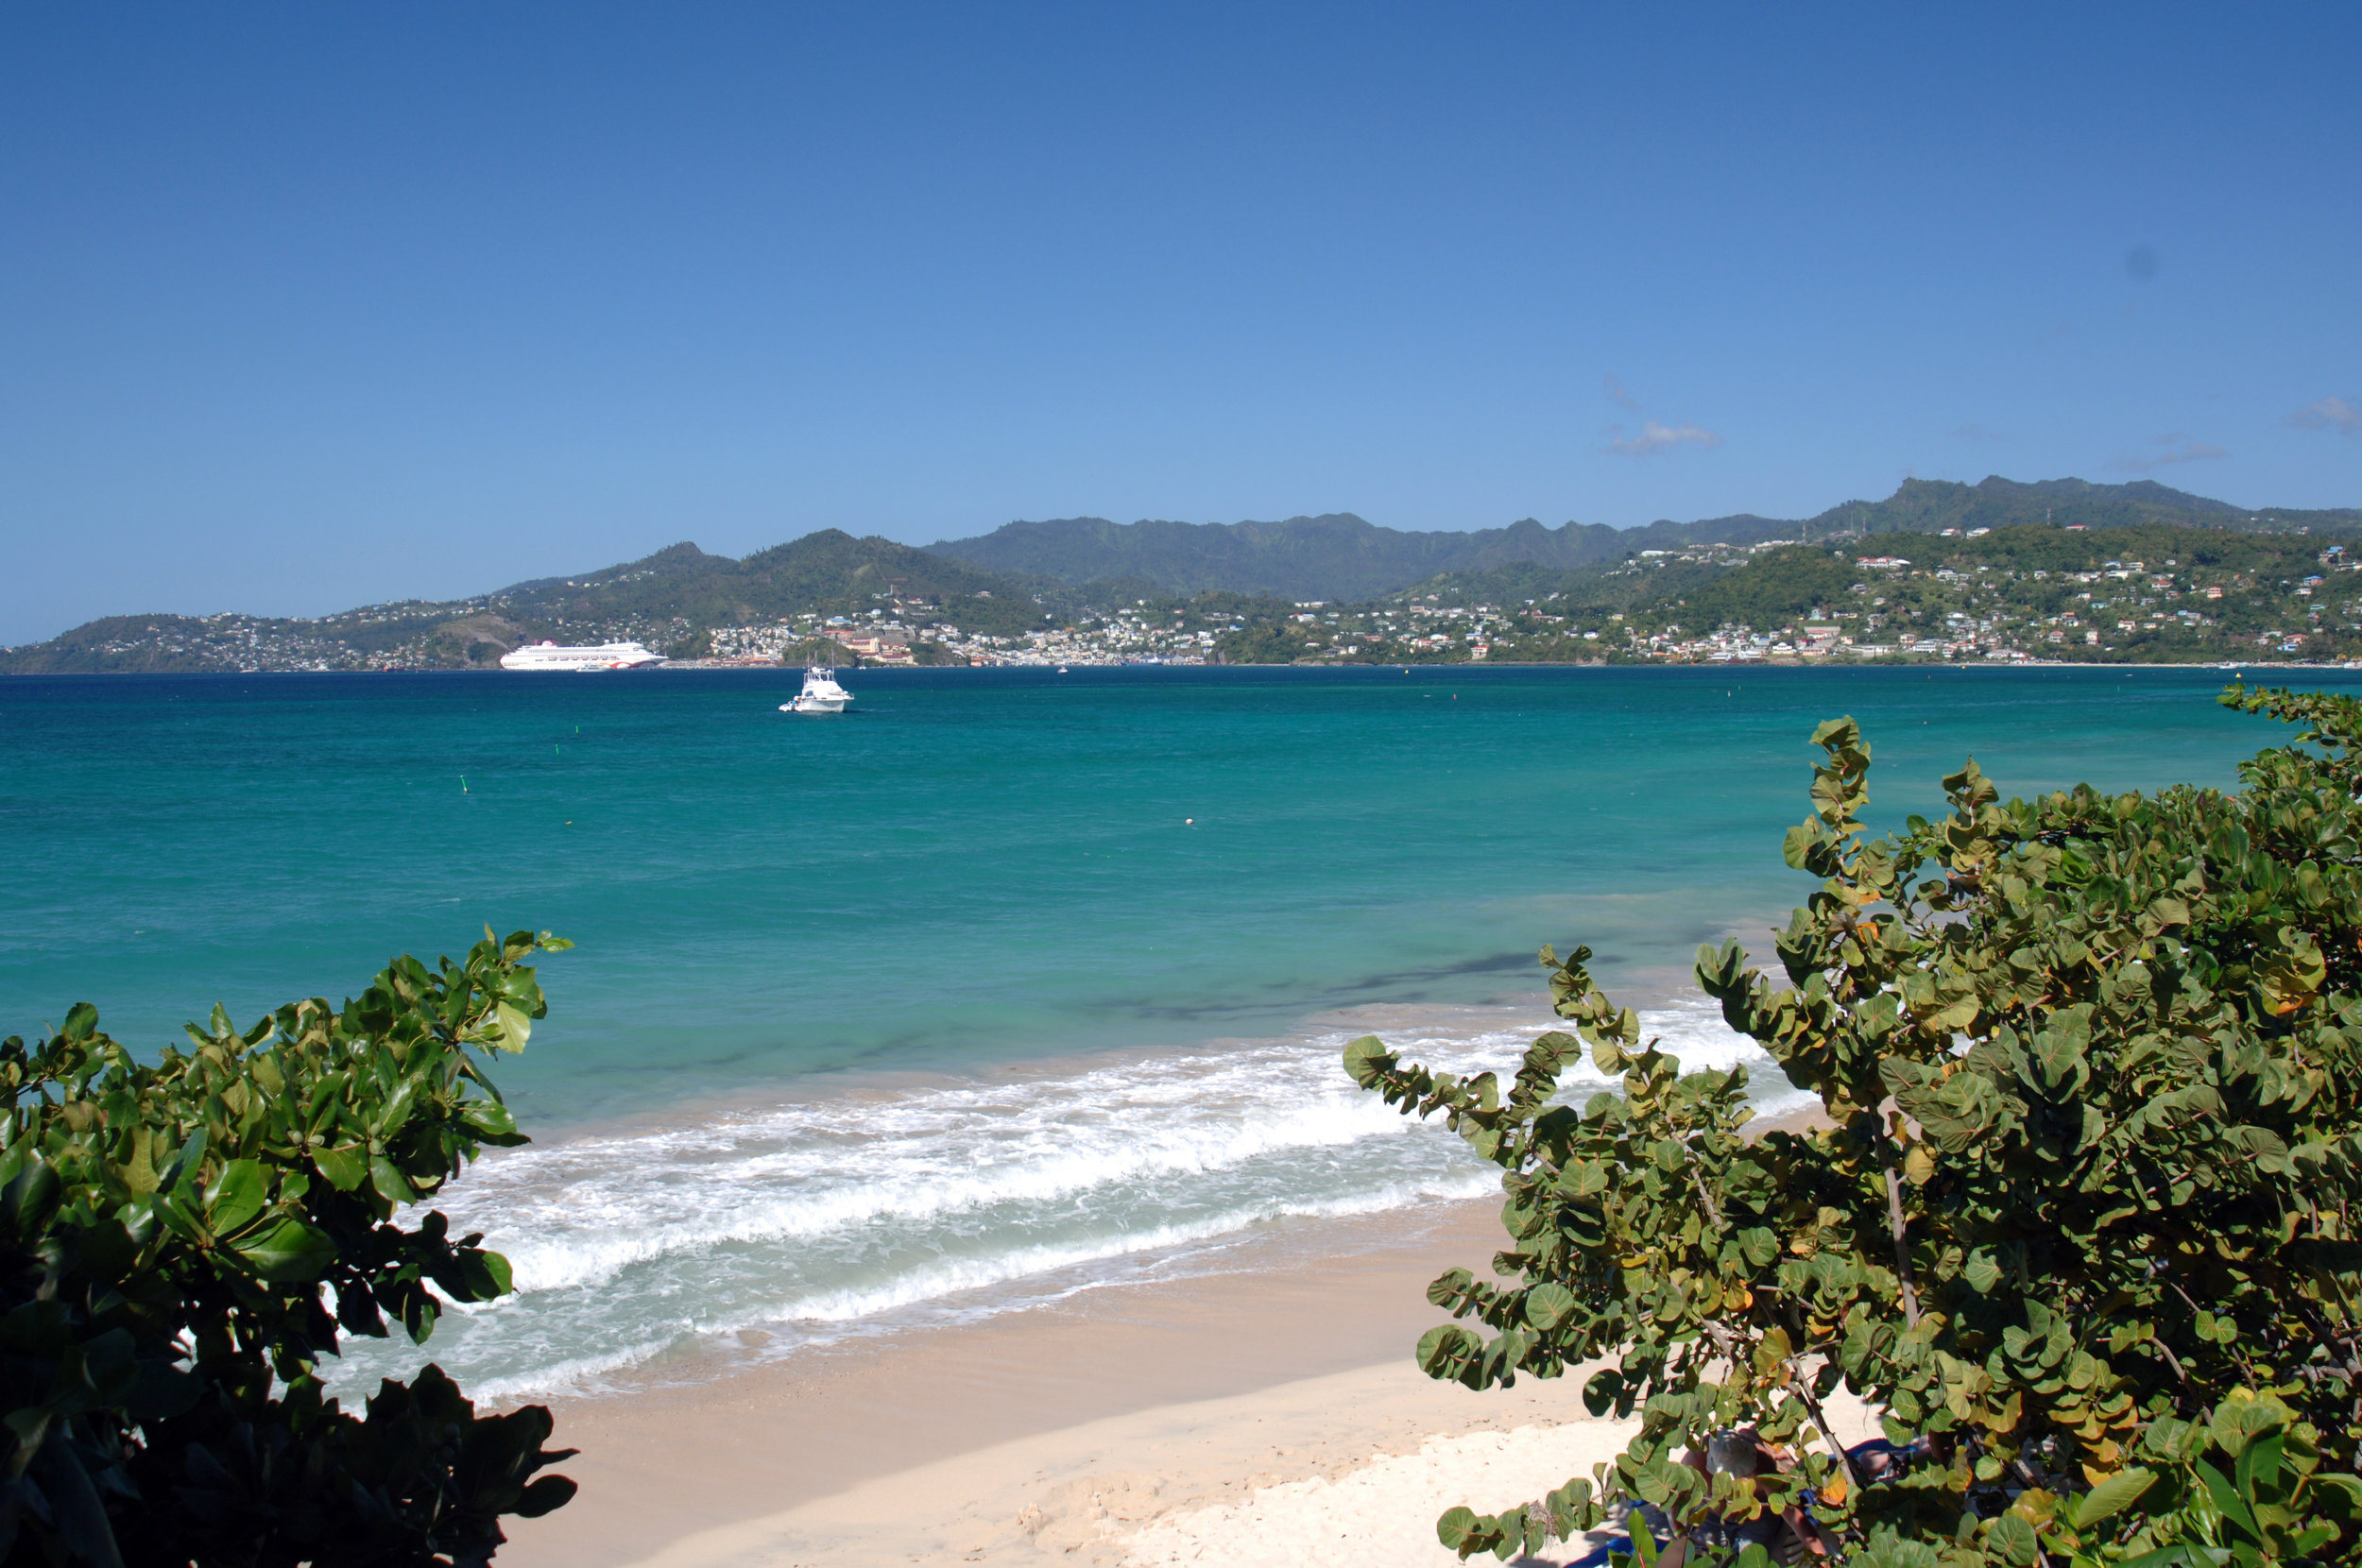 “Image courtesy of Grenada Board of Tourism”